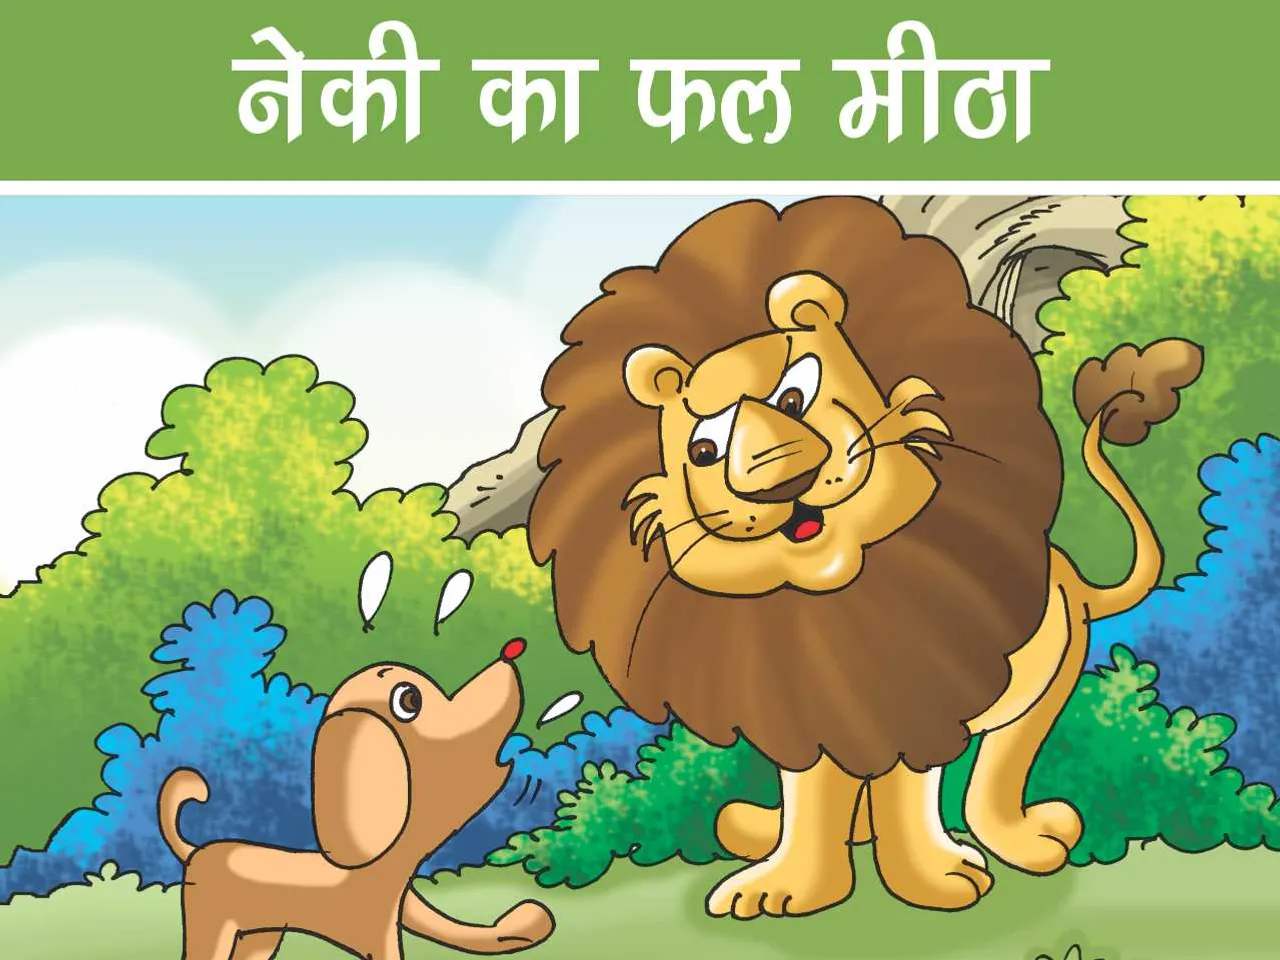 lion and dog cartoon image